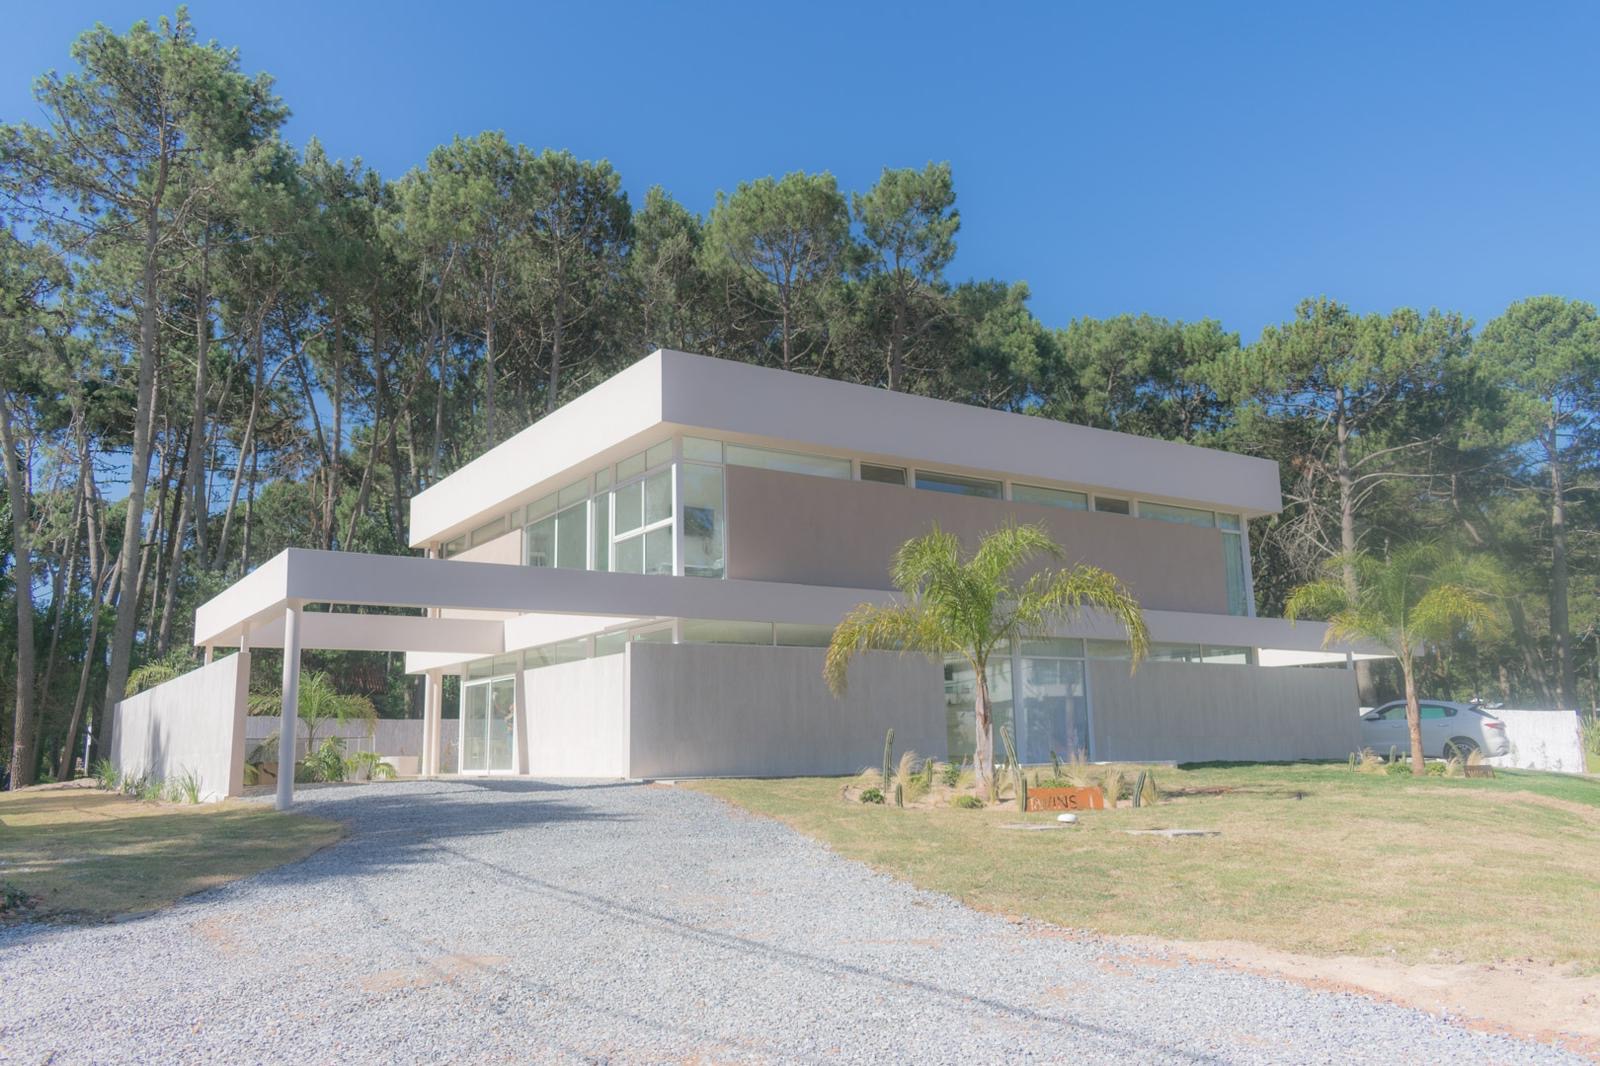  Casa en venta, a estrenar, 4 dormitorios, piscina climatizada, Solanas, Punta Ballena